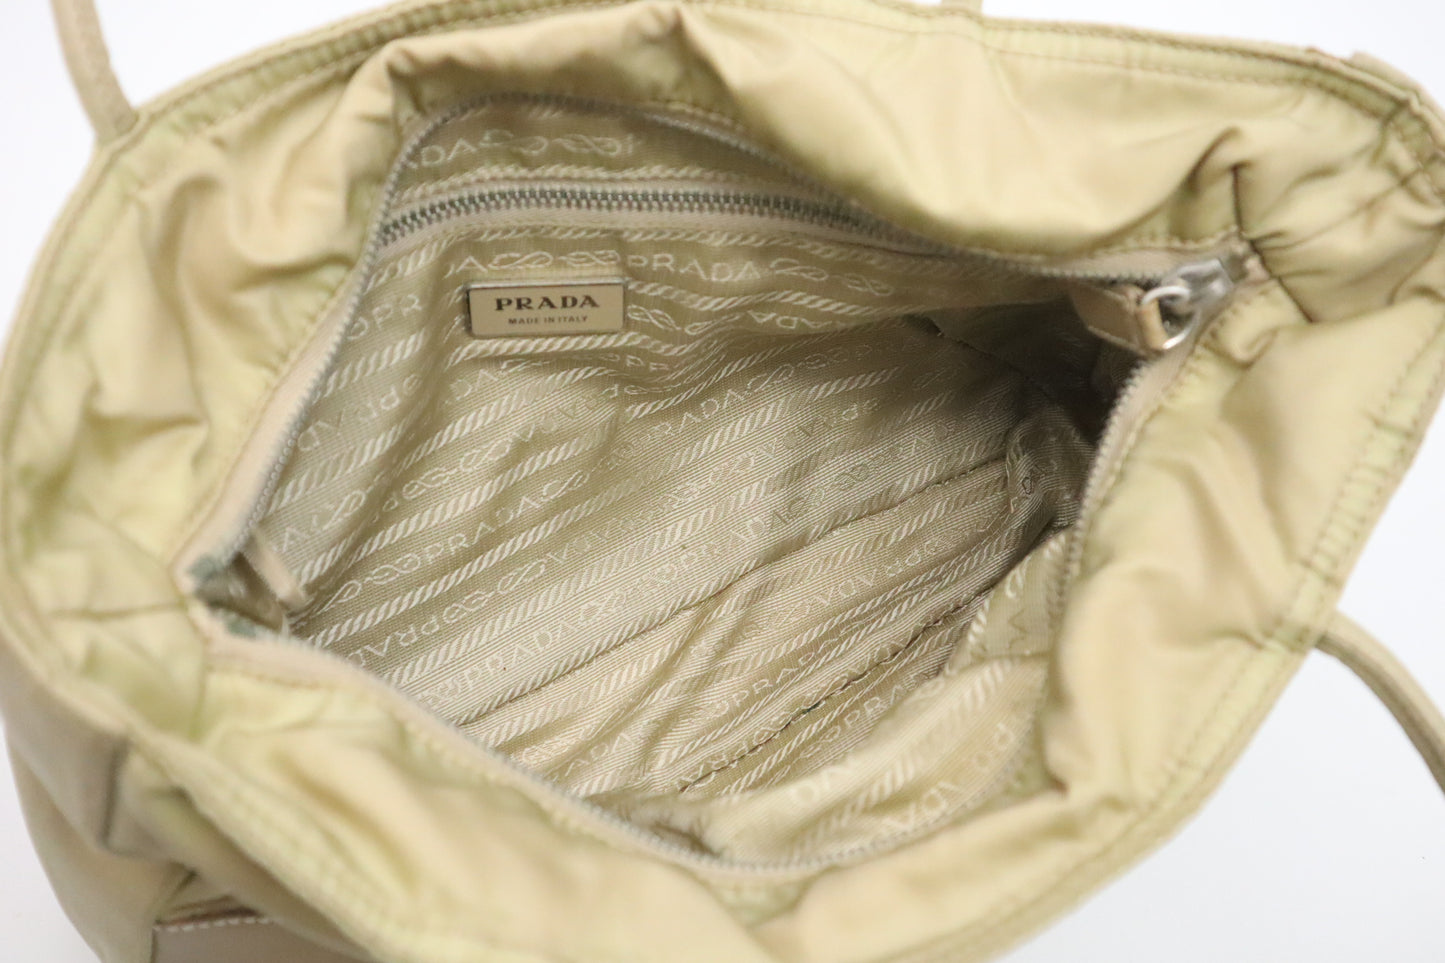 Prada Handbag in Gold Nylon